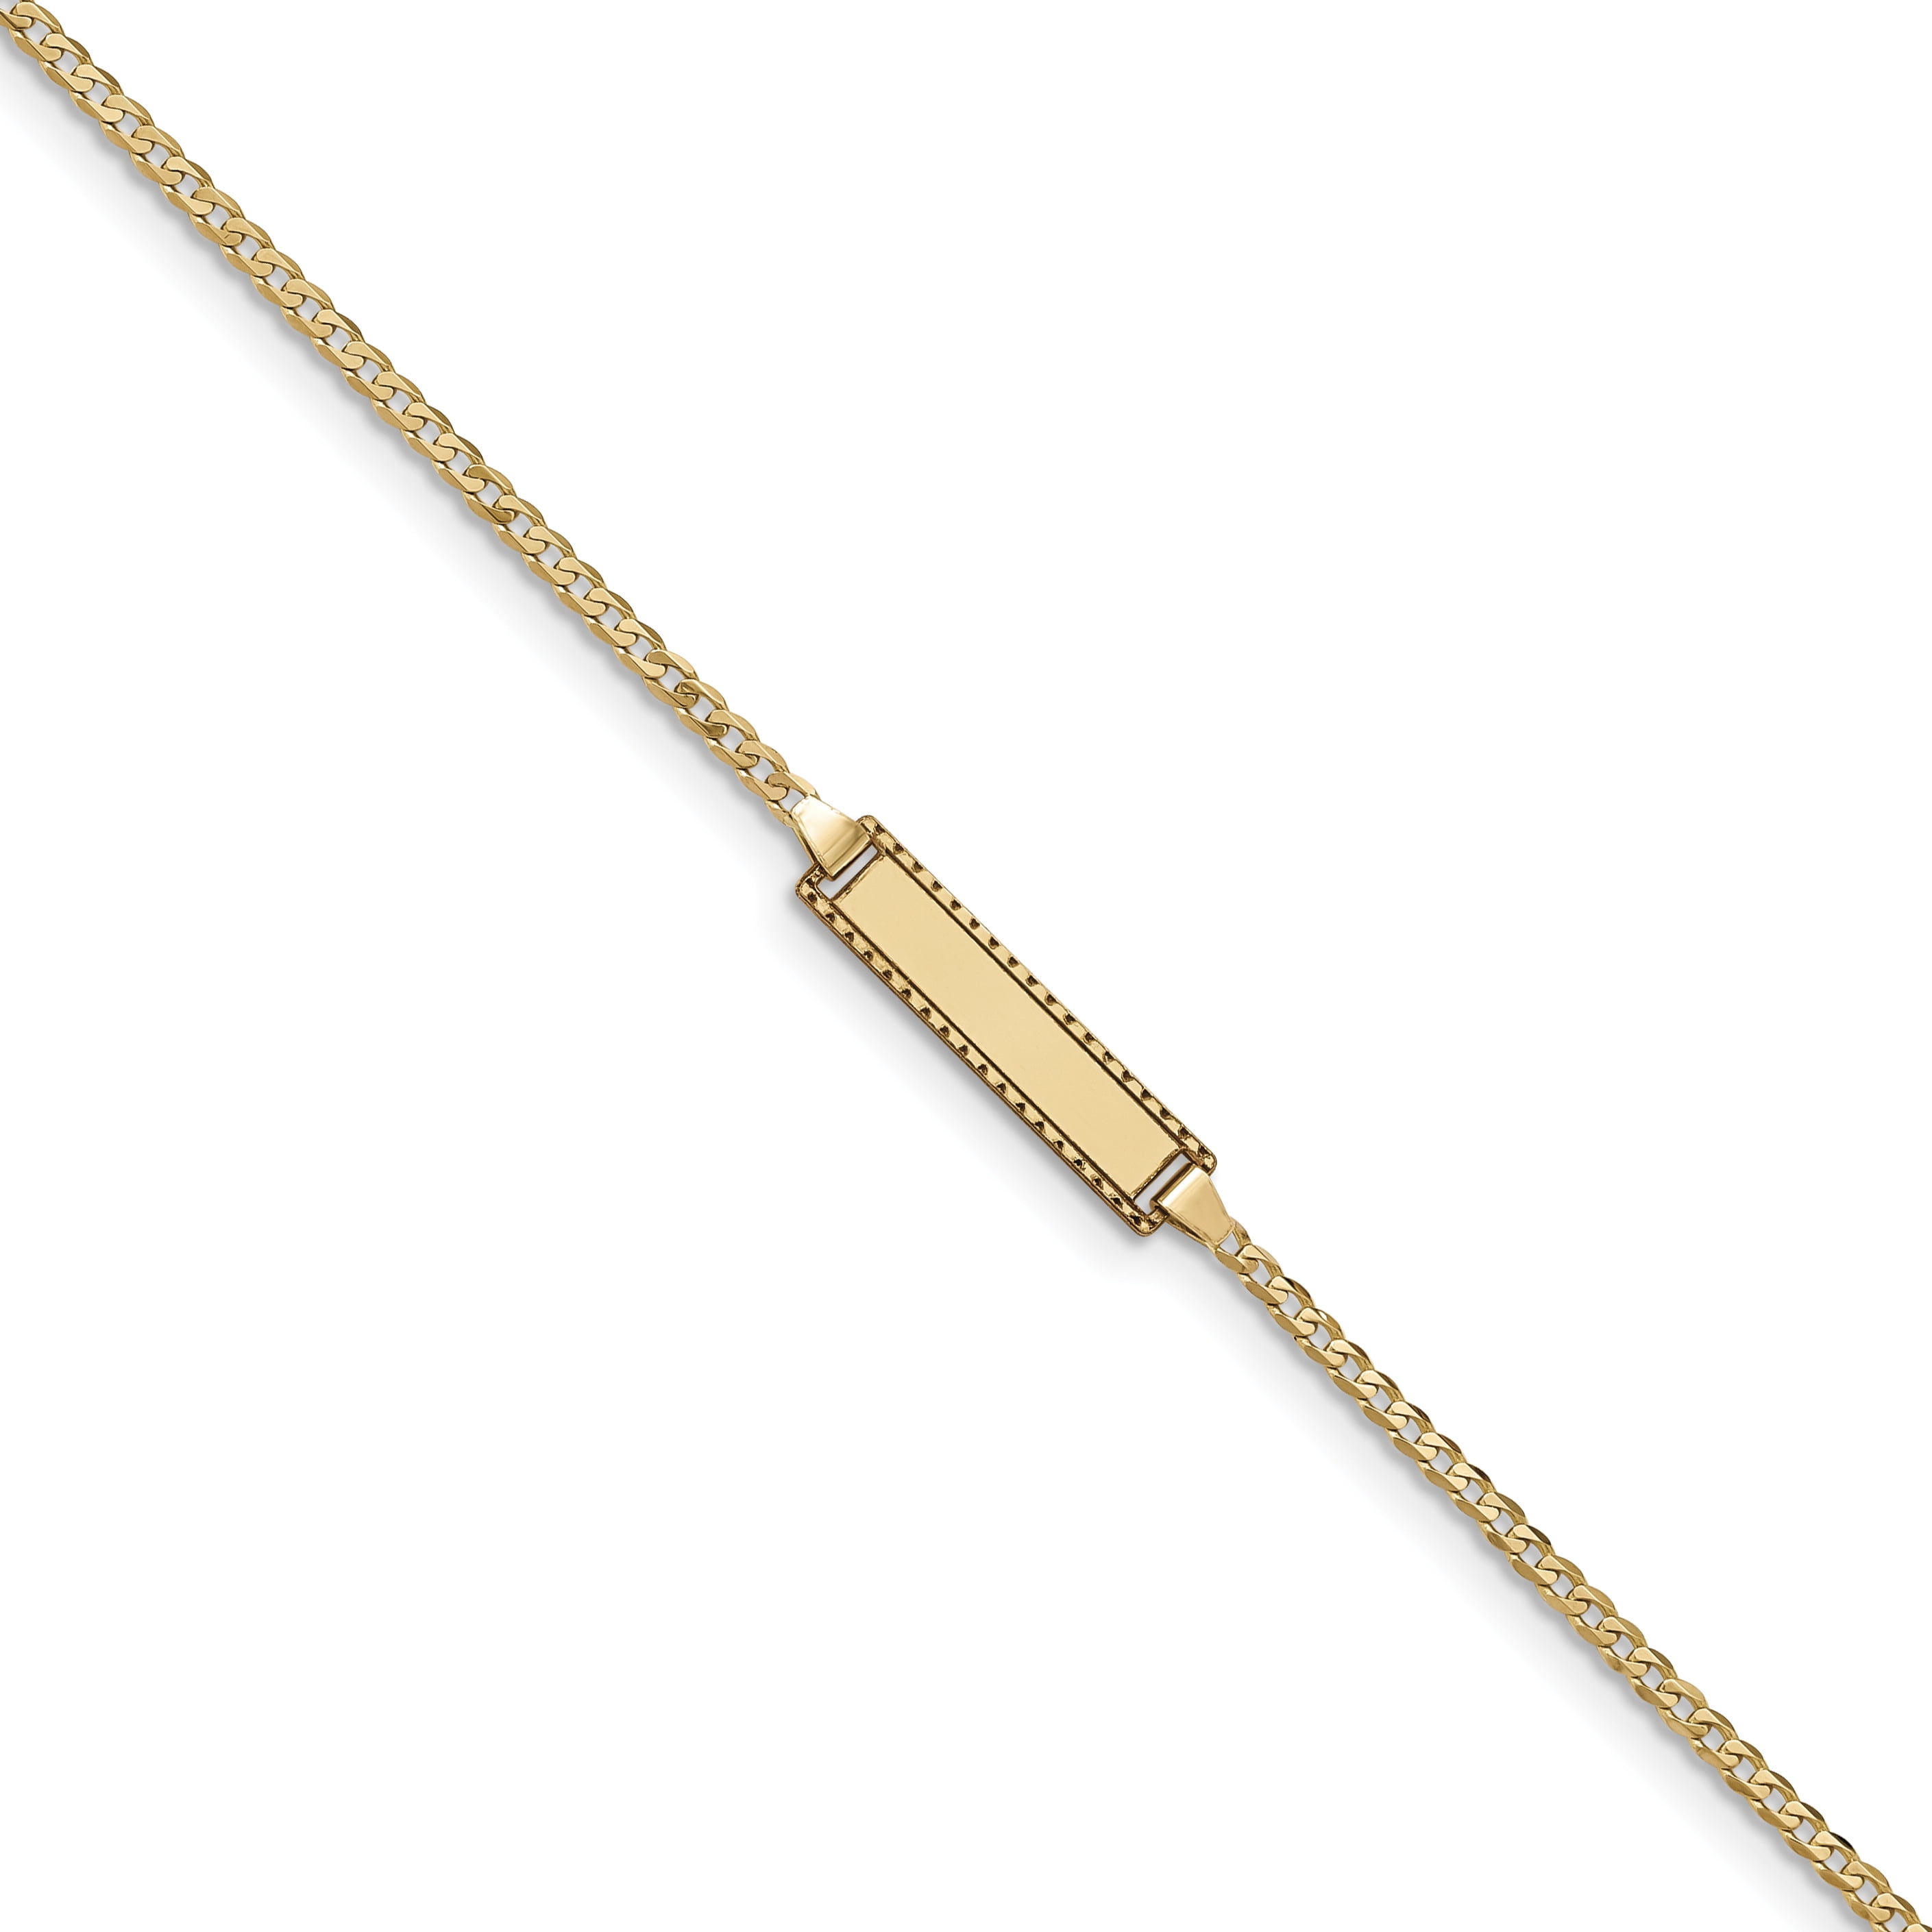 Real 14k yellow gold baby id bracelet 5.5 inch/6.5inch  adjustable baby bracelet 